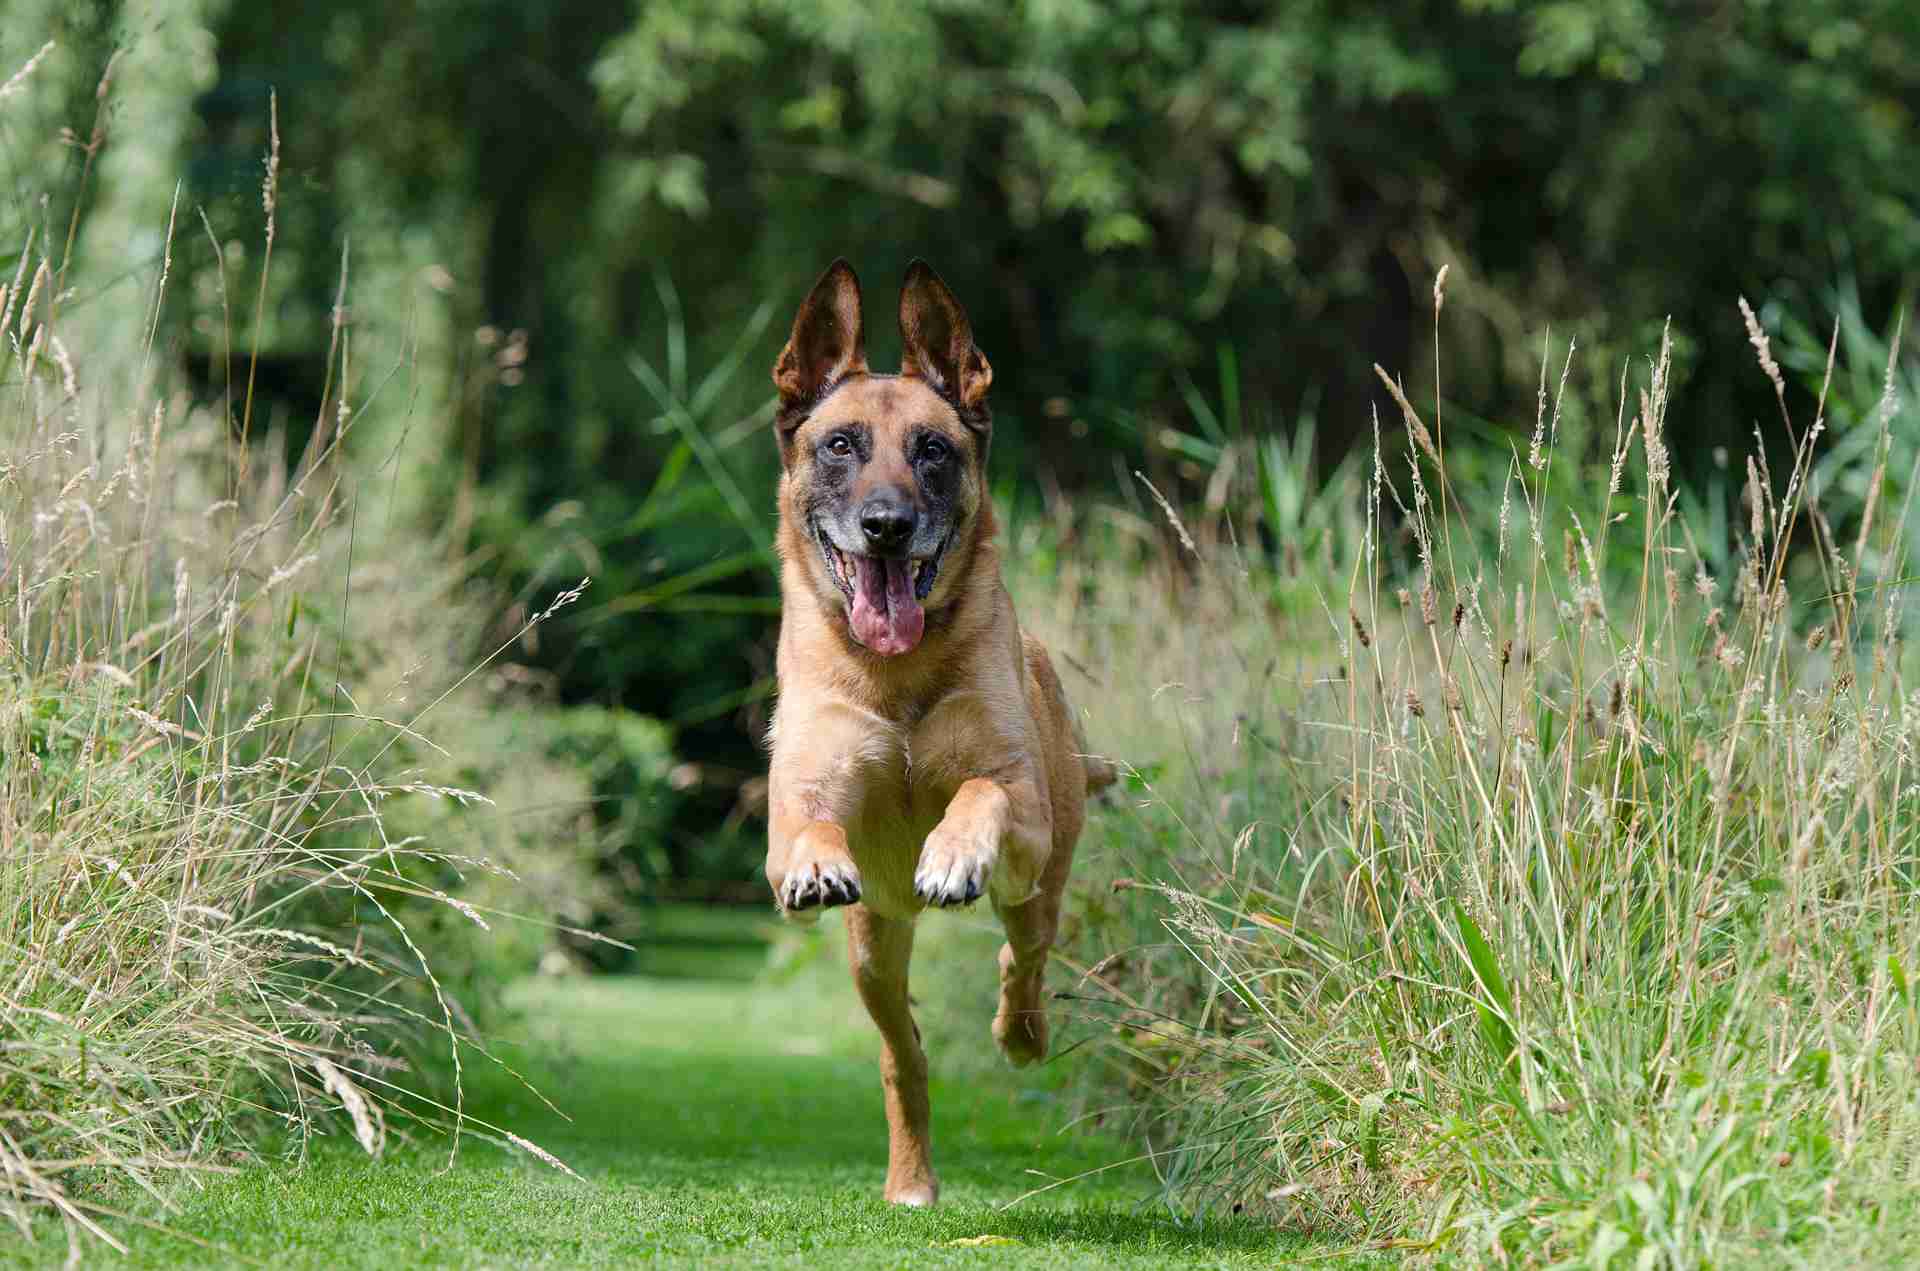 Dog running across the green